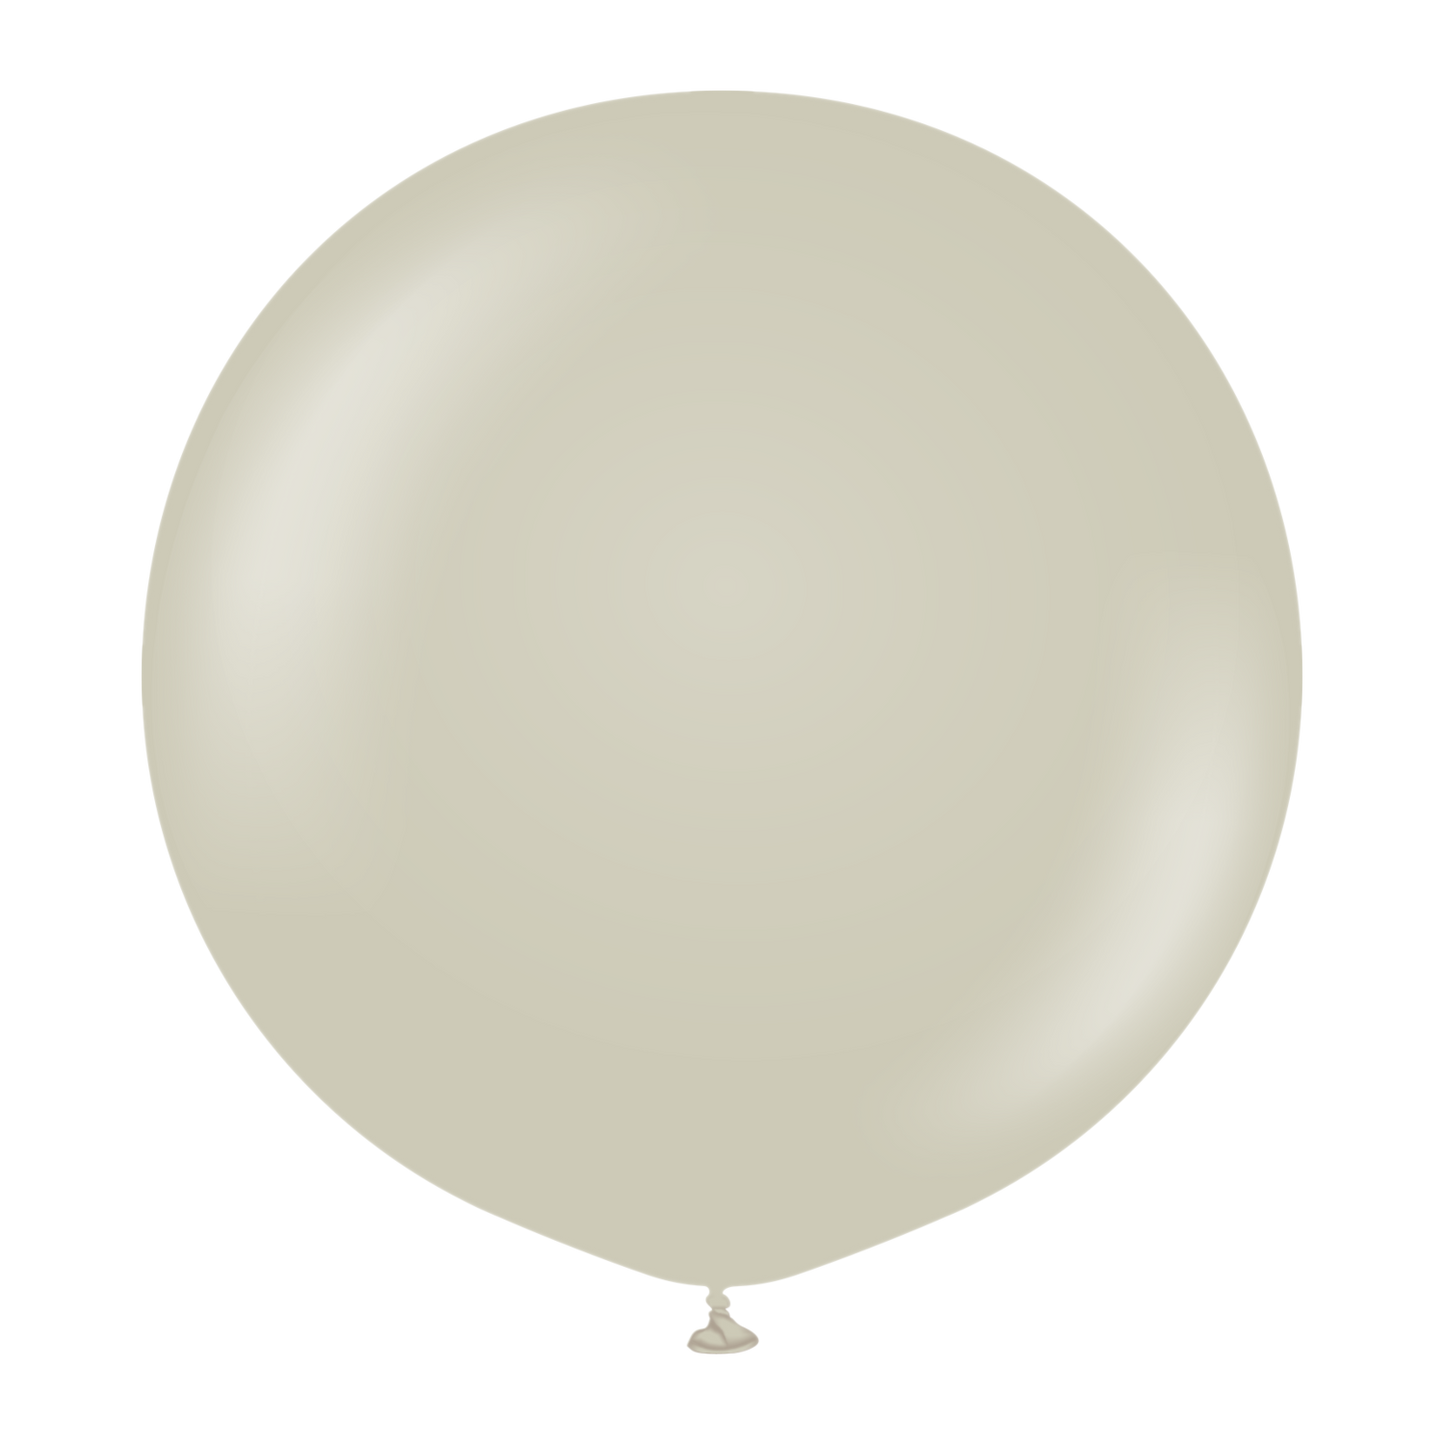 Kalisan / BWS 24" Ballons rétro